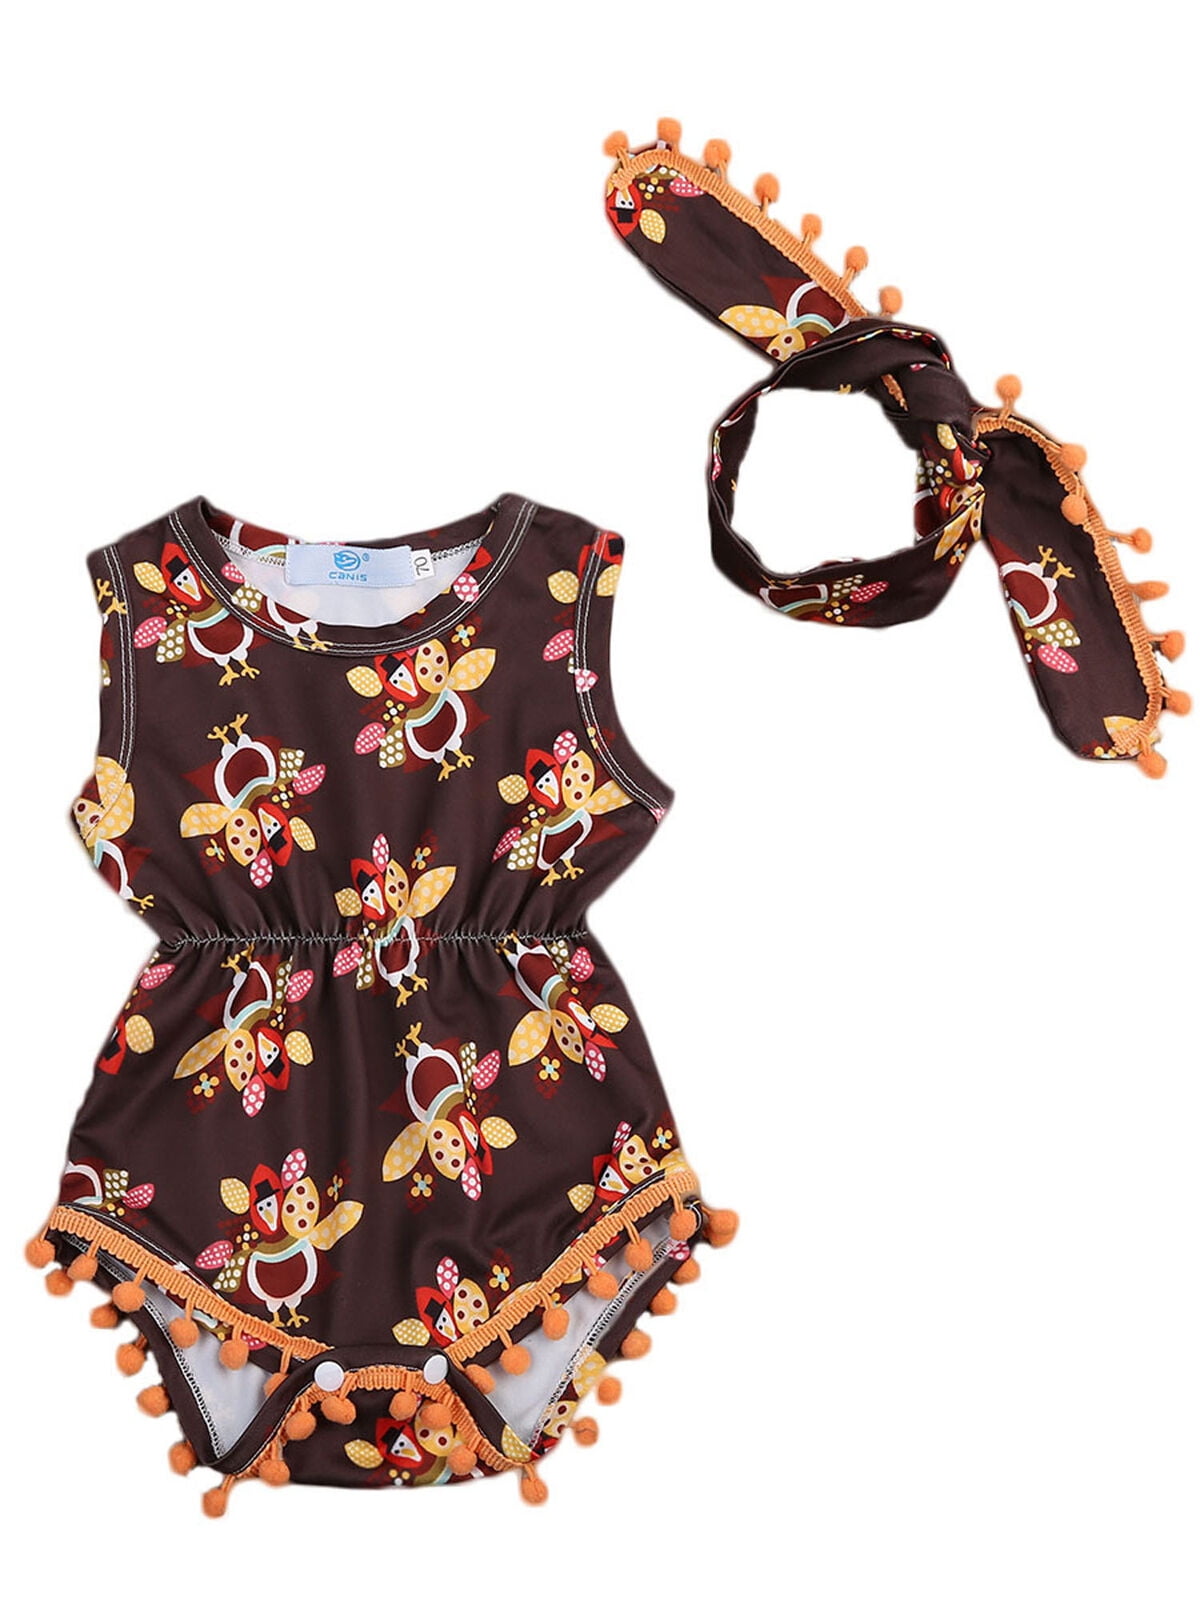 US Summer Tassels Newborn Baby Girl Sleeveless Romper Jumpsuit Outfits Sunsuit 